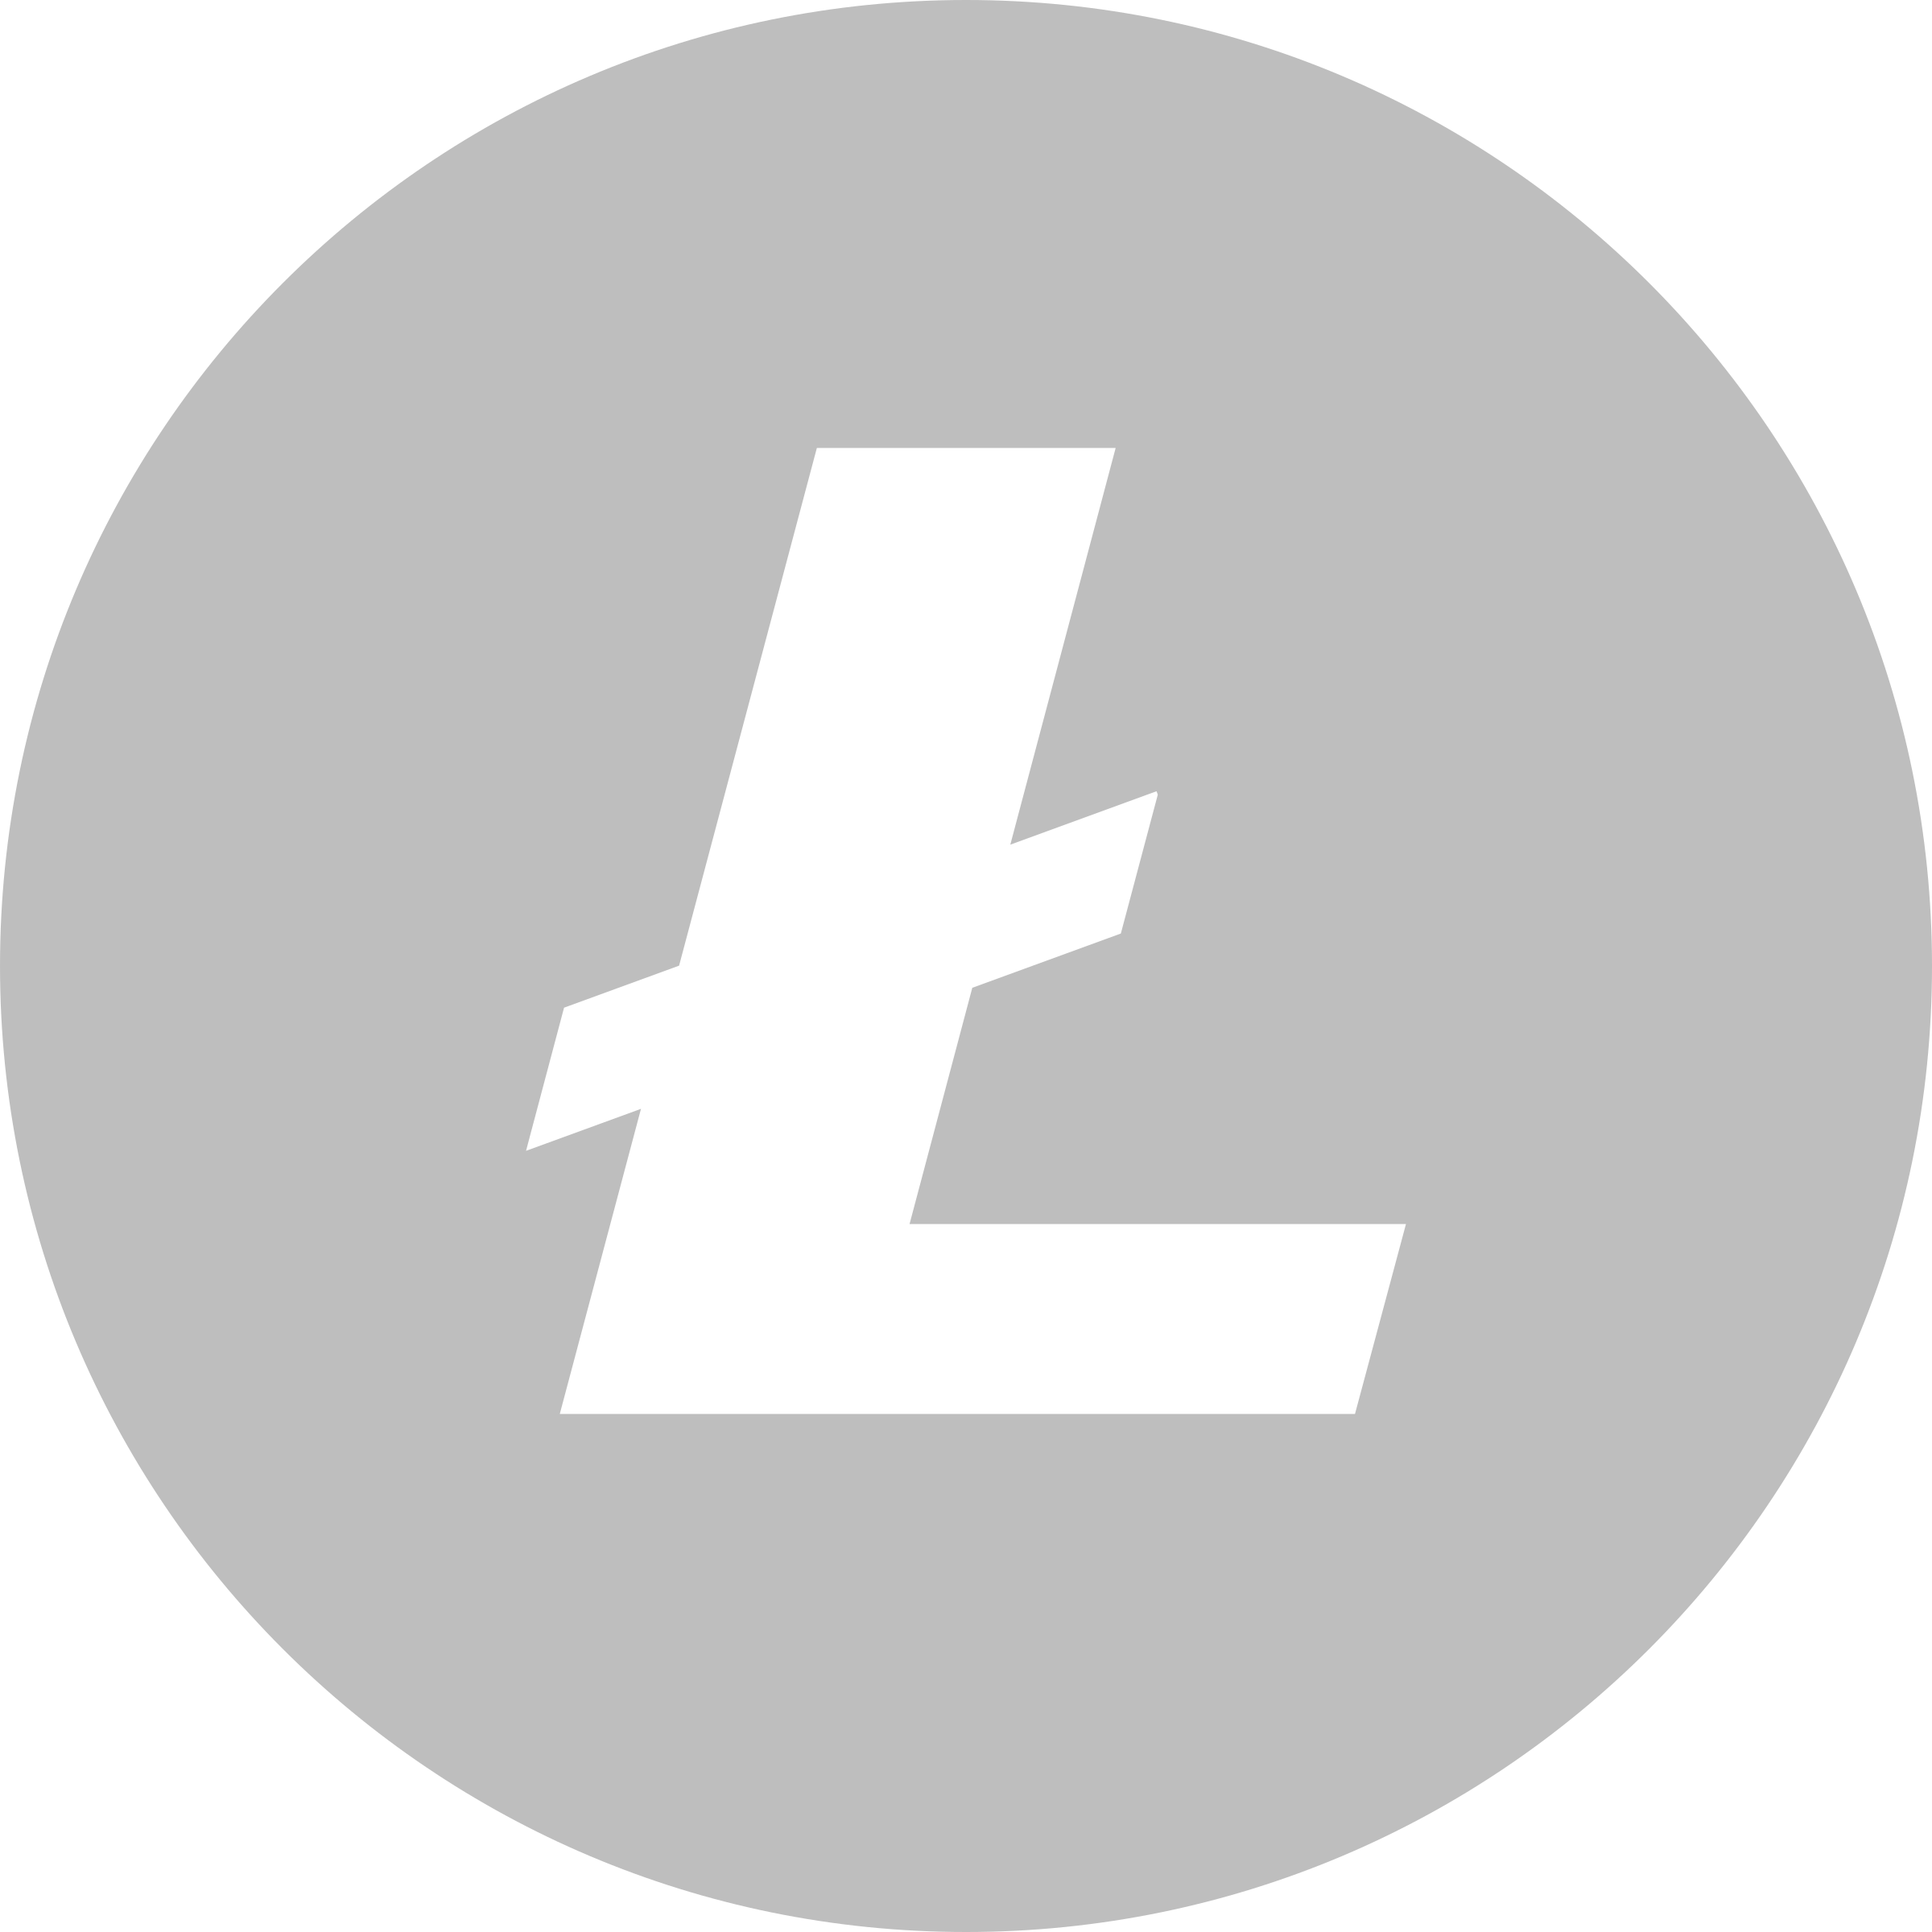 A White Litecoin Logo In A Grey Circle